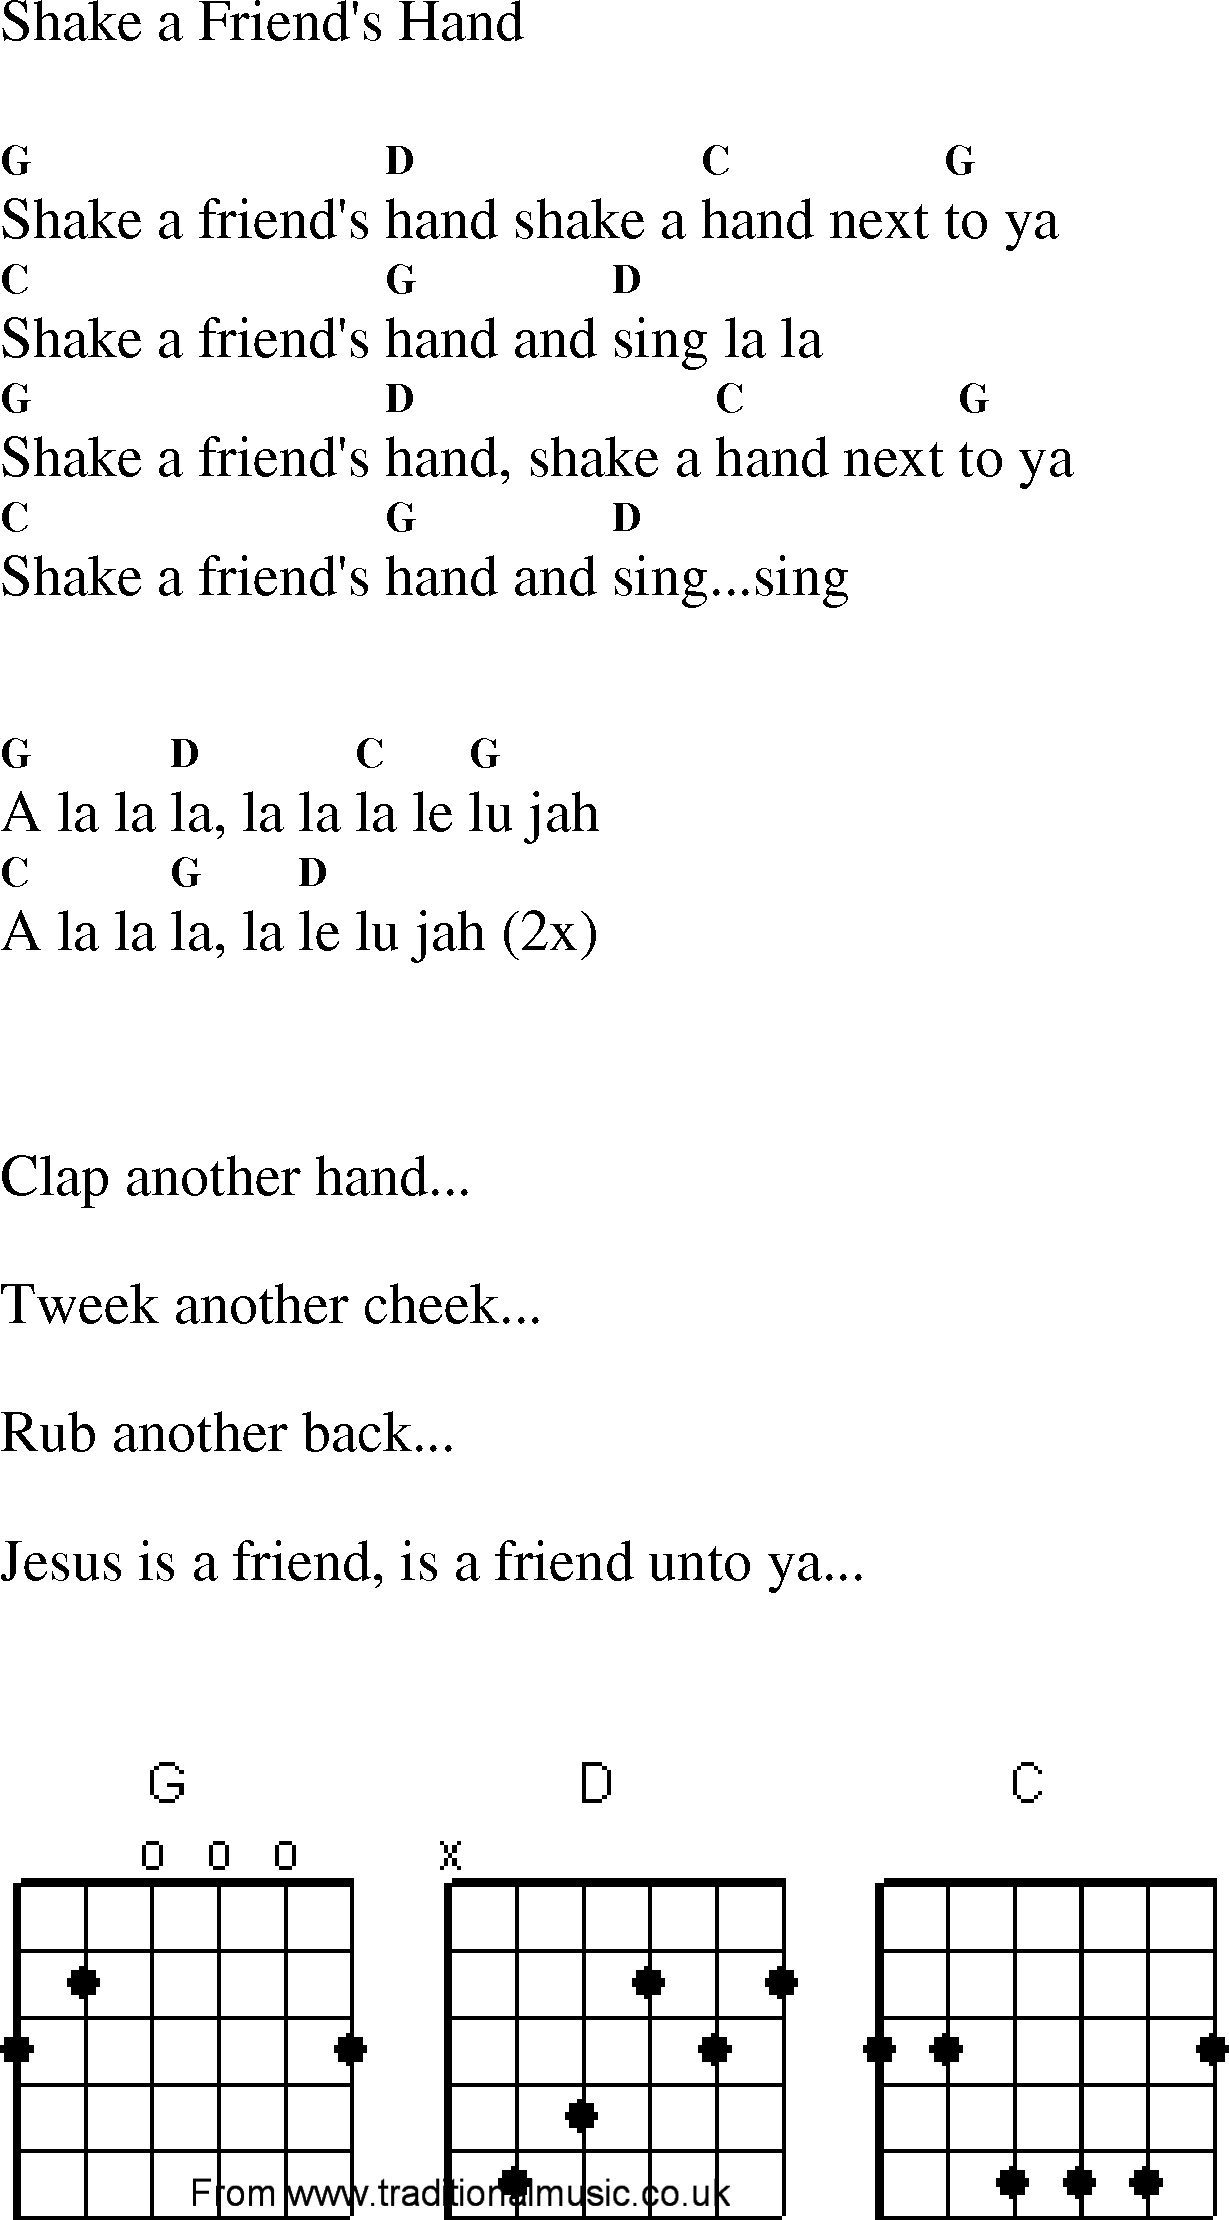 Gospel Song: shake_a_friends_hand, lyrics and chords.